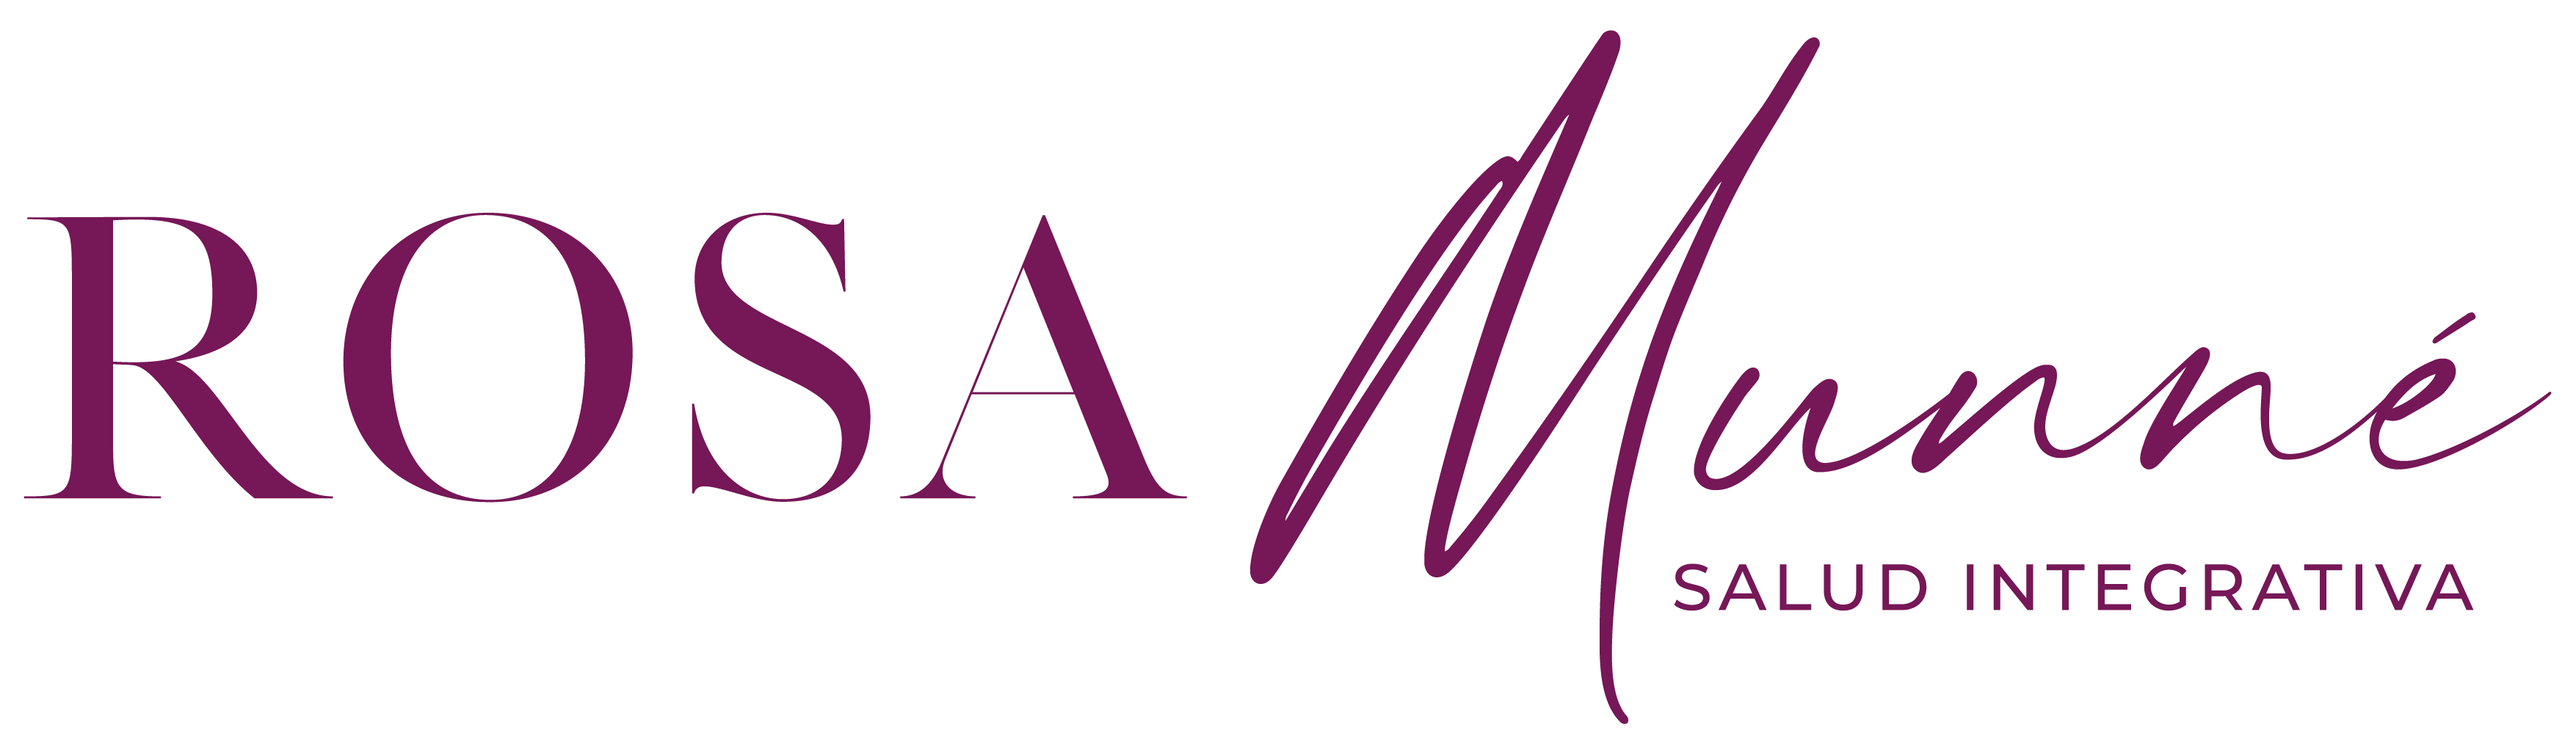 RosaMunne_Logotipo